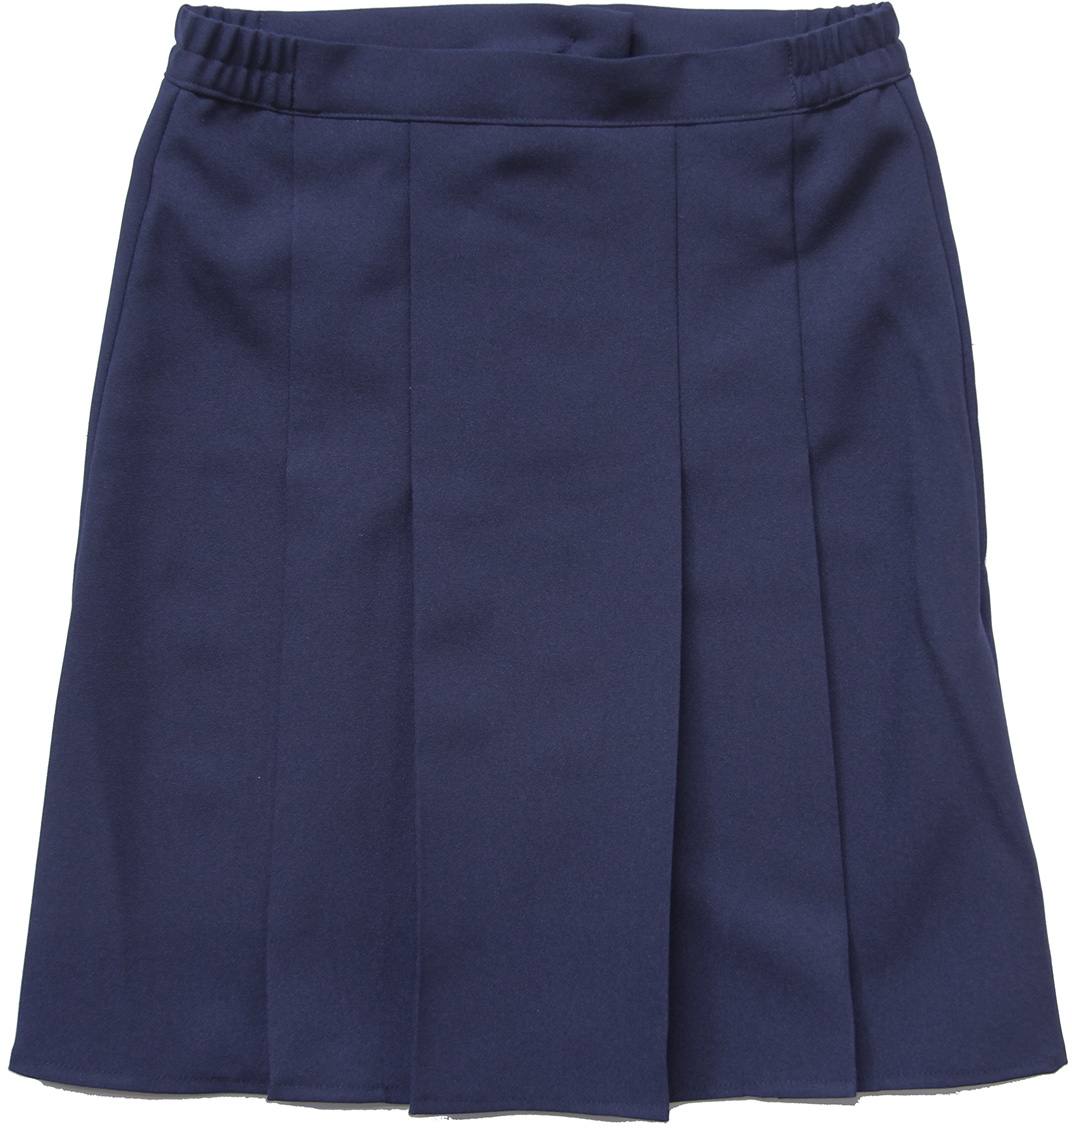 Partiotuote Scout skirt women’s sizes Blue 42